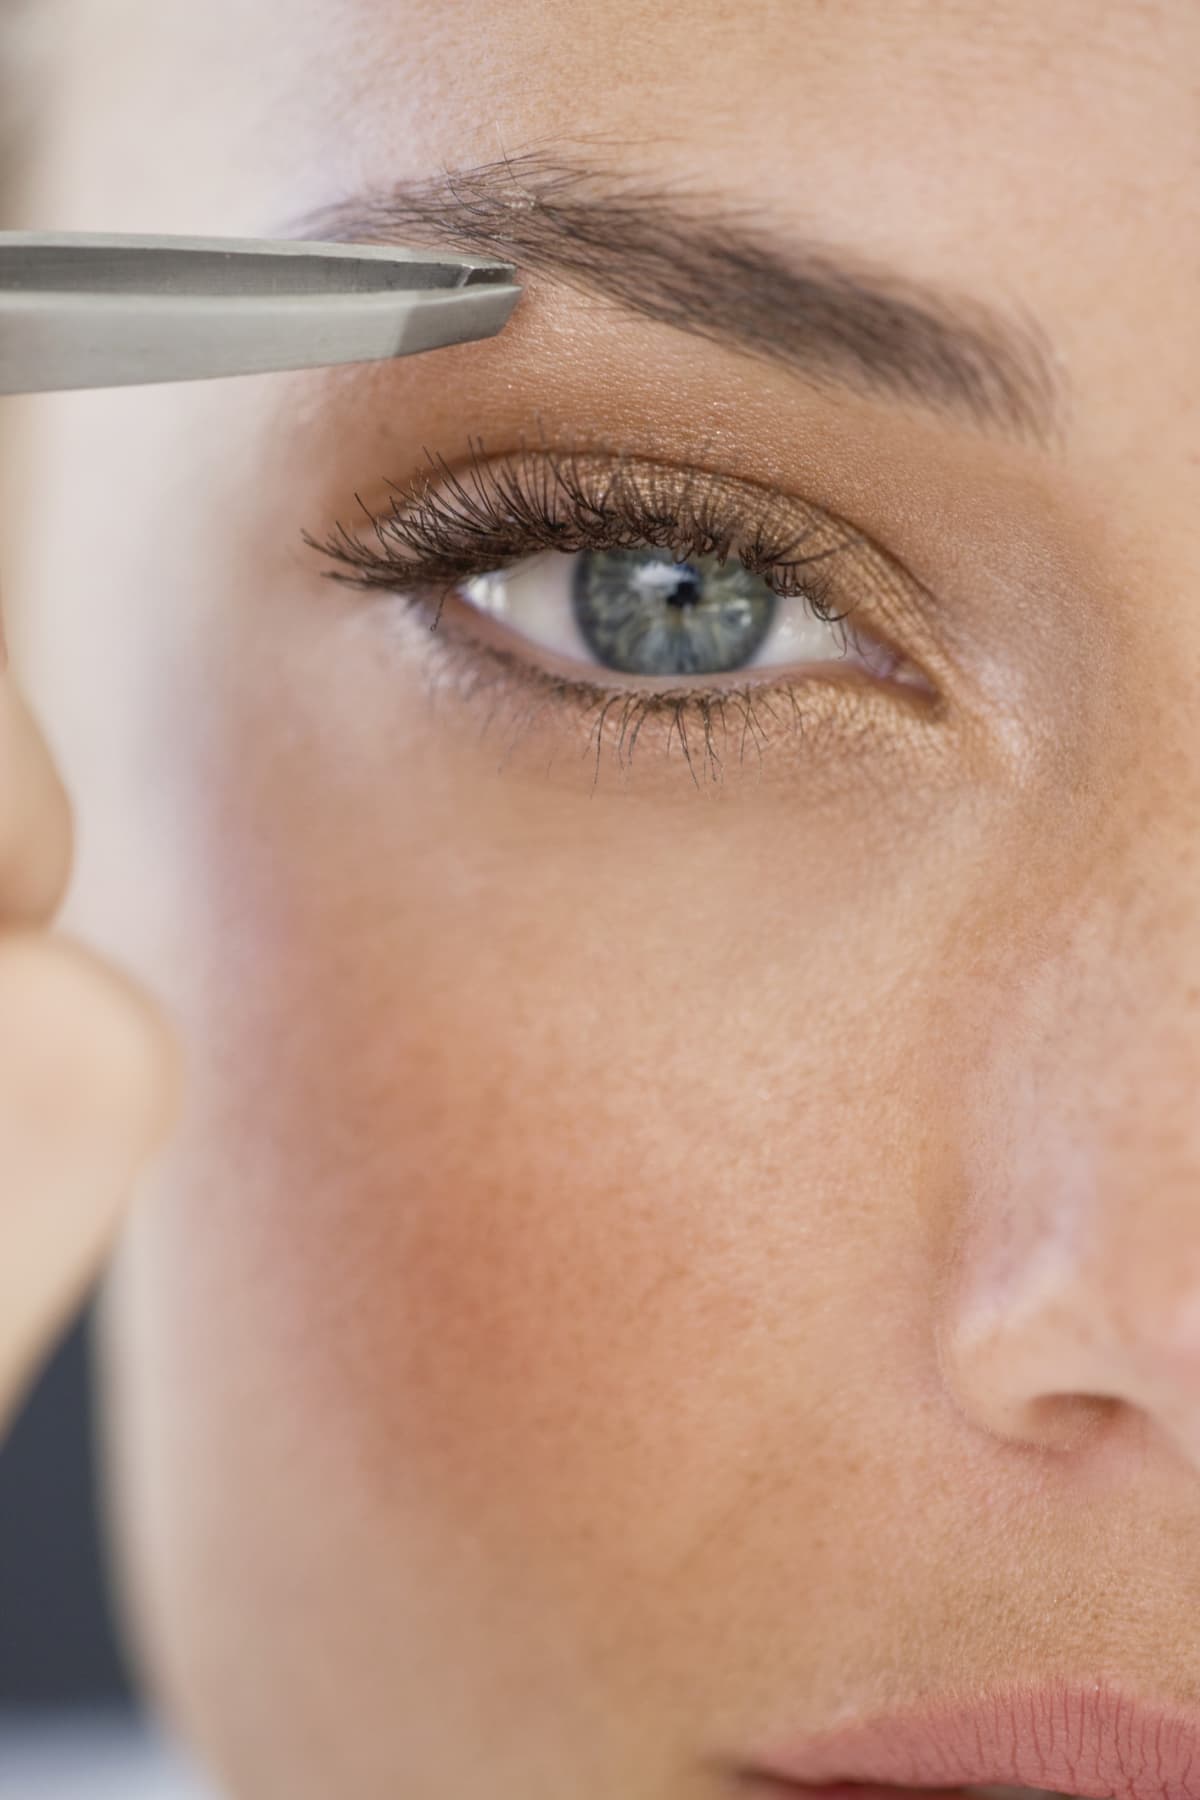 Close-up of woman's eye and eyelashes.